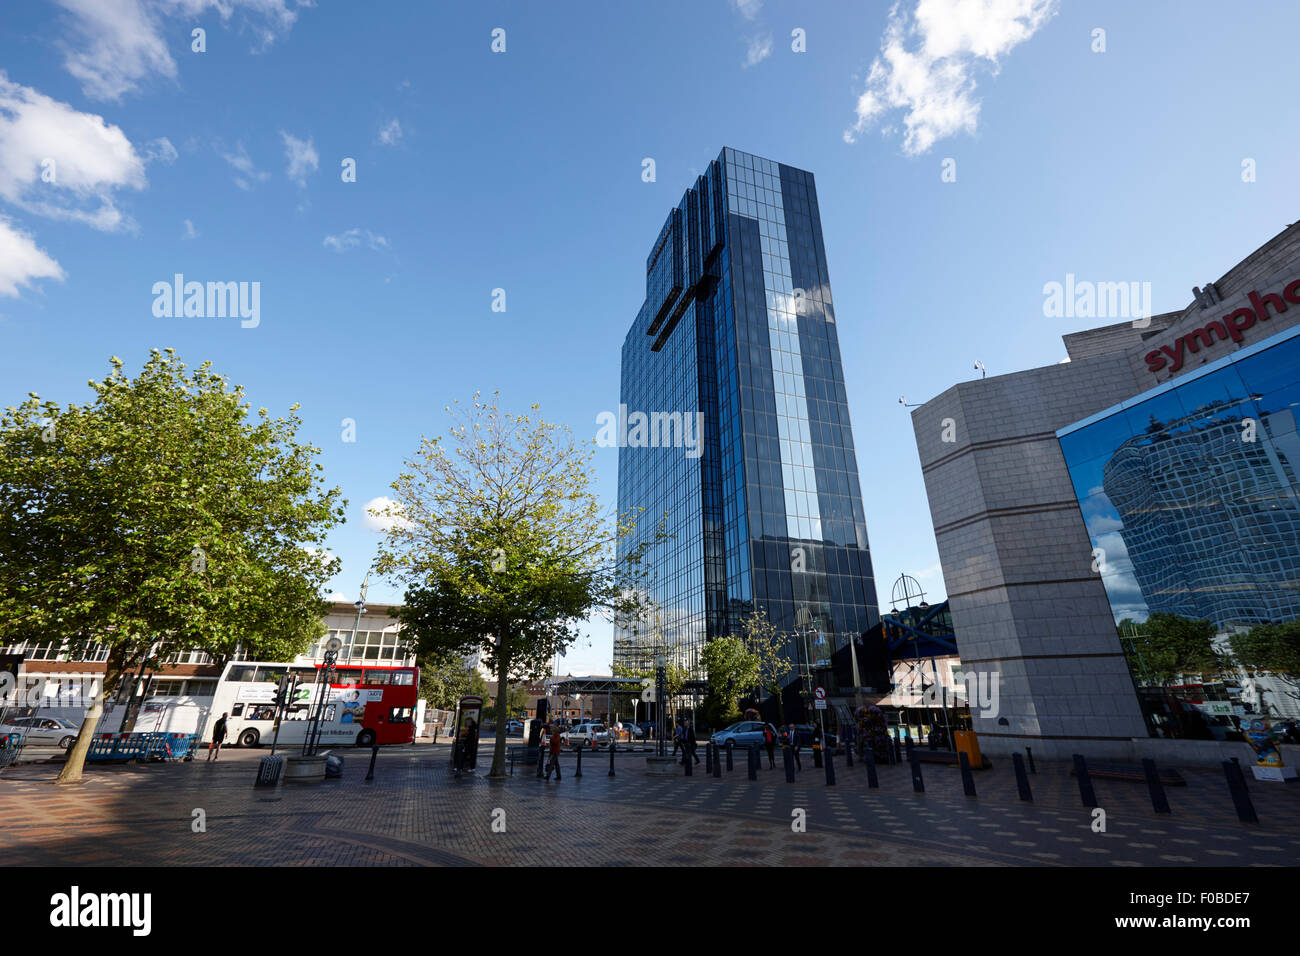 Hyatt regency hotel and centenary square Birmingham UK Stock Photo